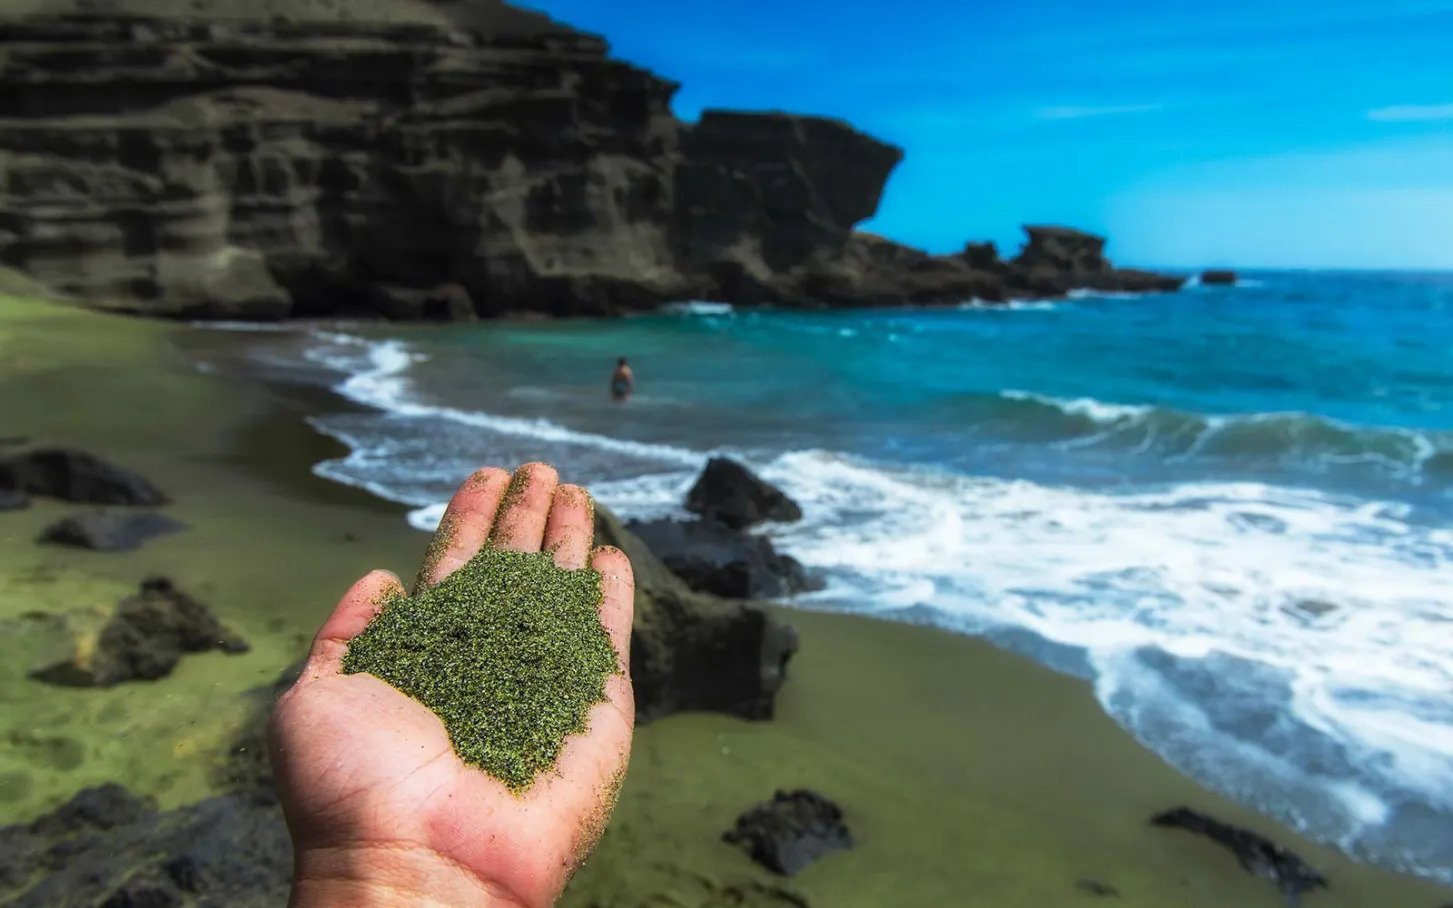 Vesta spreads olivine on US beaches